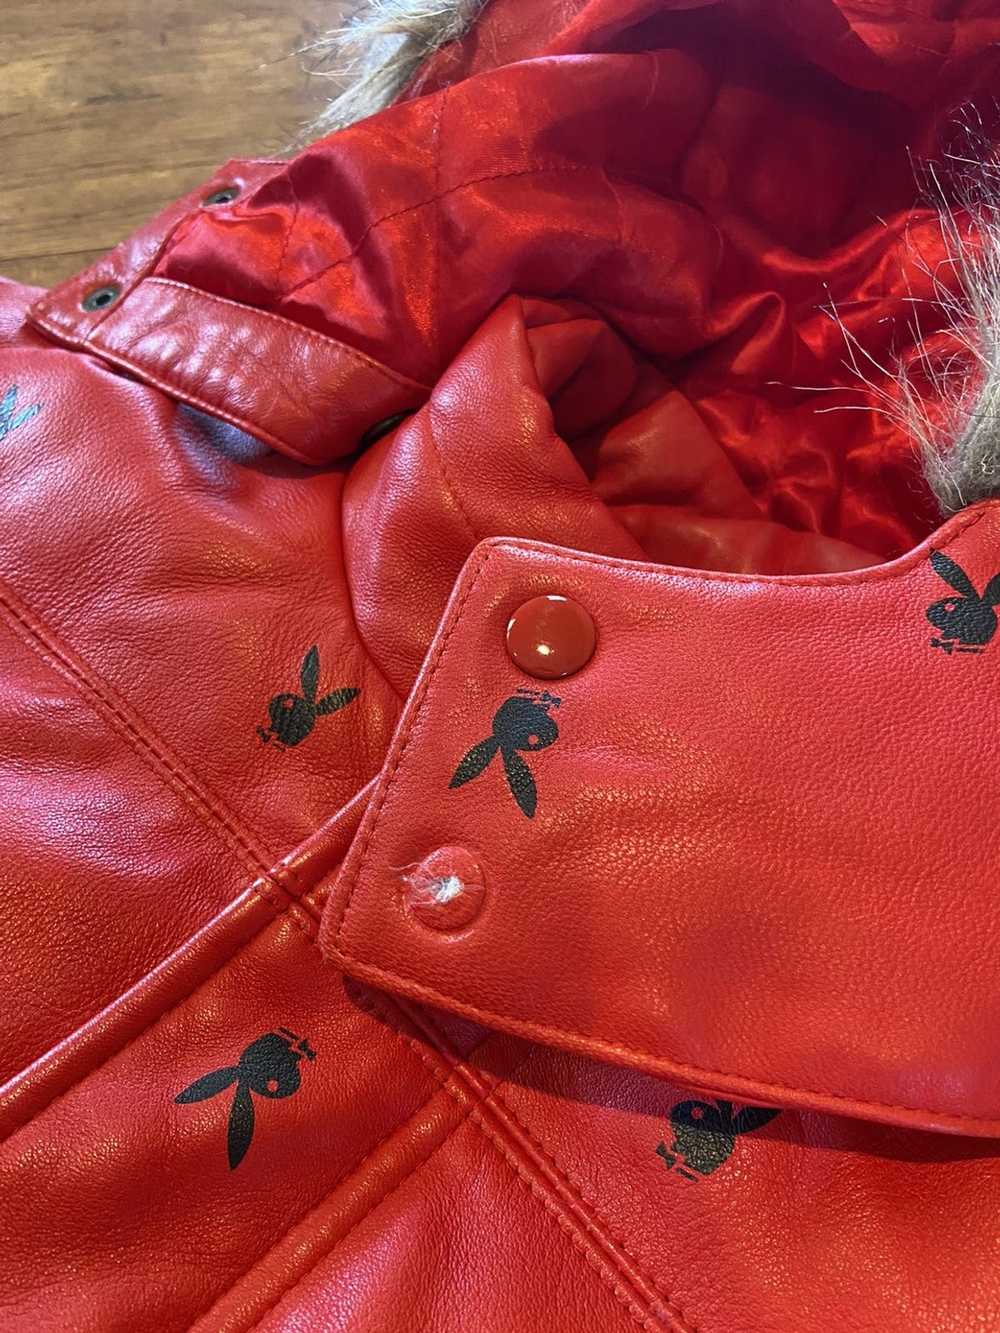 Supreme Supreme x playboy leather puffer jacket - image 8